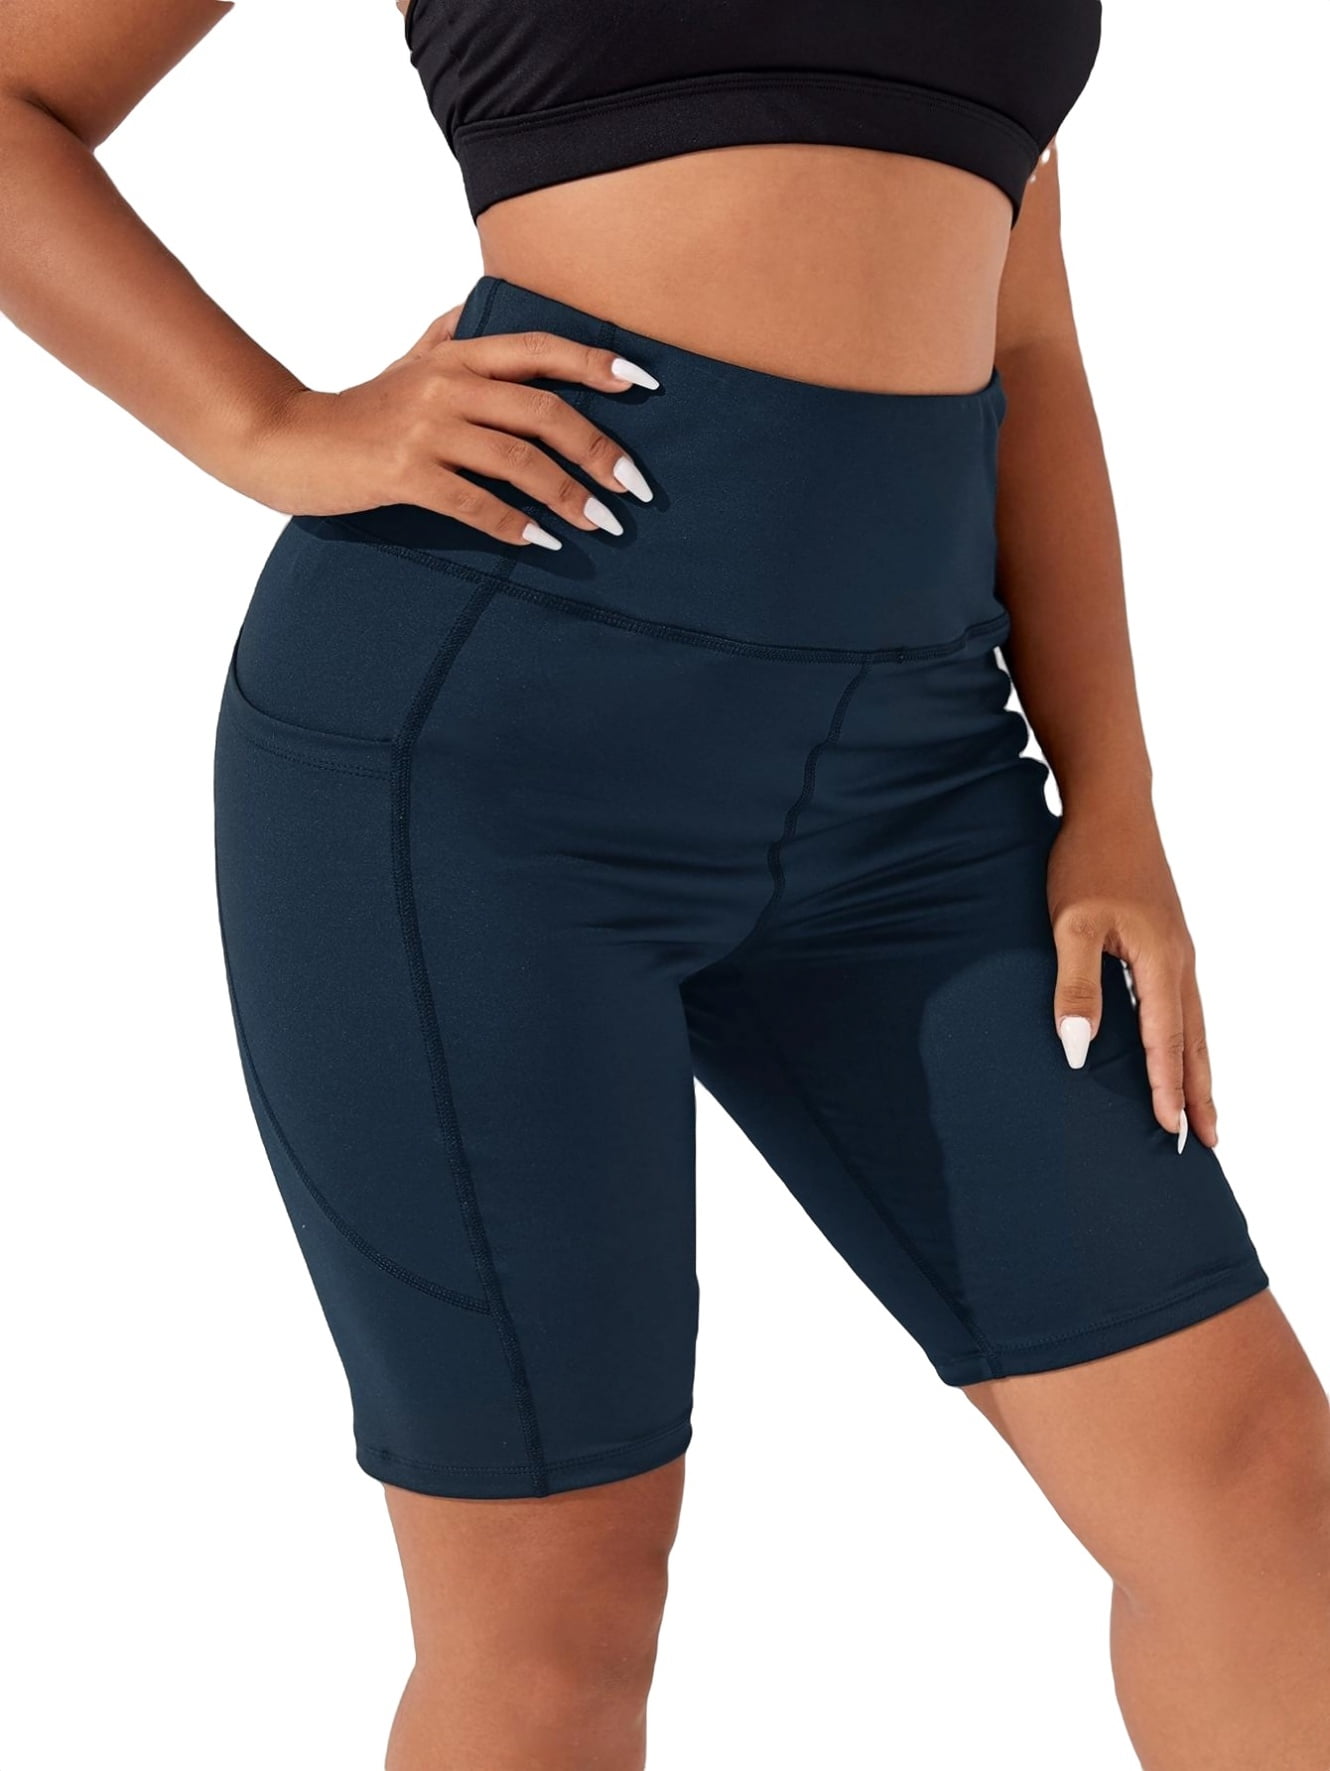 Women's Waist Tummy Control Workout Yoga Shorts Black Compression Athletic Bike  Running Shorts Slim Stretch Gym Tights - AliExpress